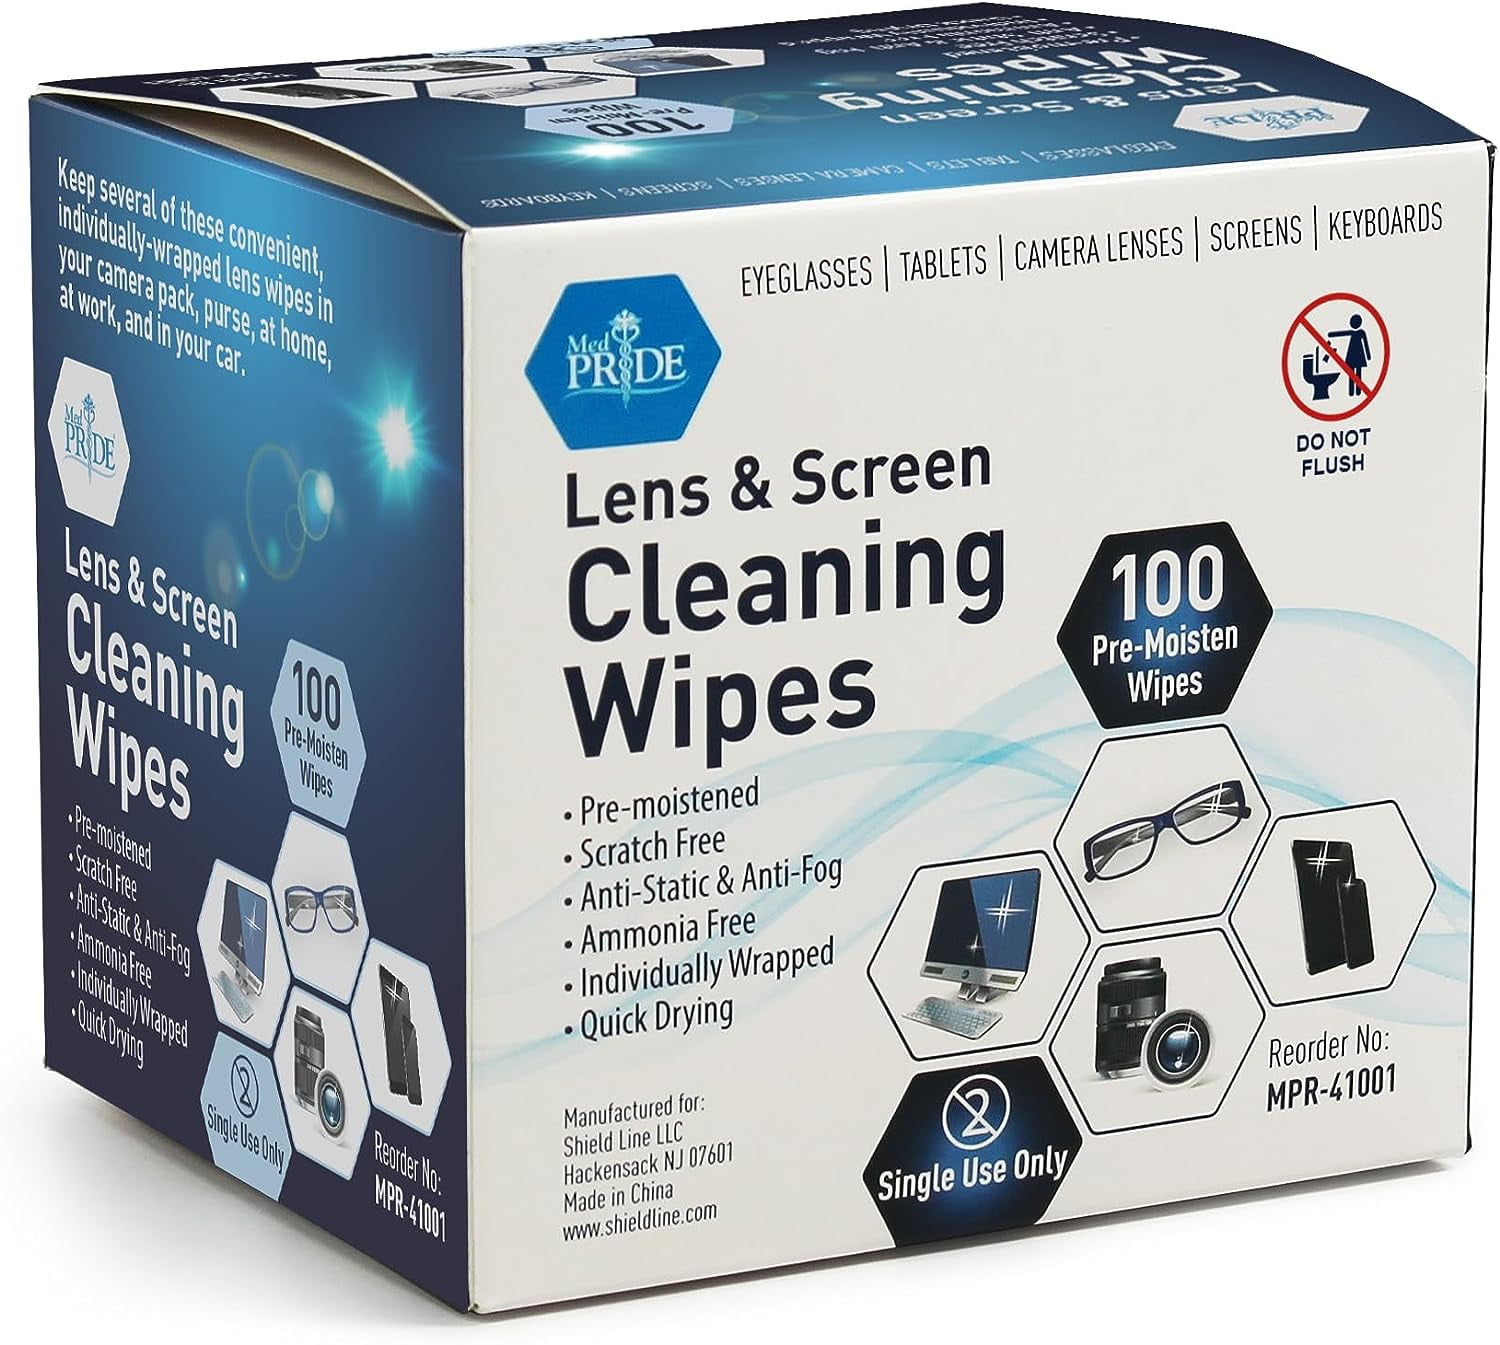 Yogo Vision Anti Fog Wipes for Glasses Pre Moistened Cleaner Lens Wipes for Screens, Binoculars, Face Sheilds, Ski Masks, Swim Goggles, Individual